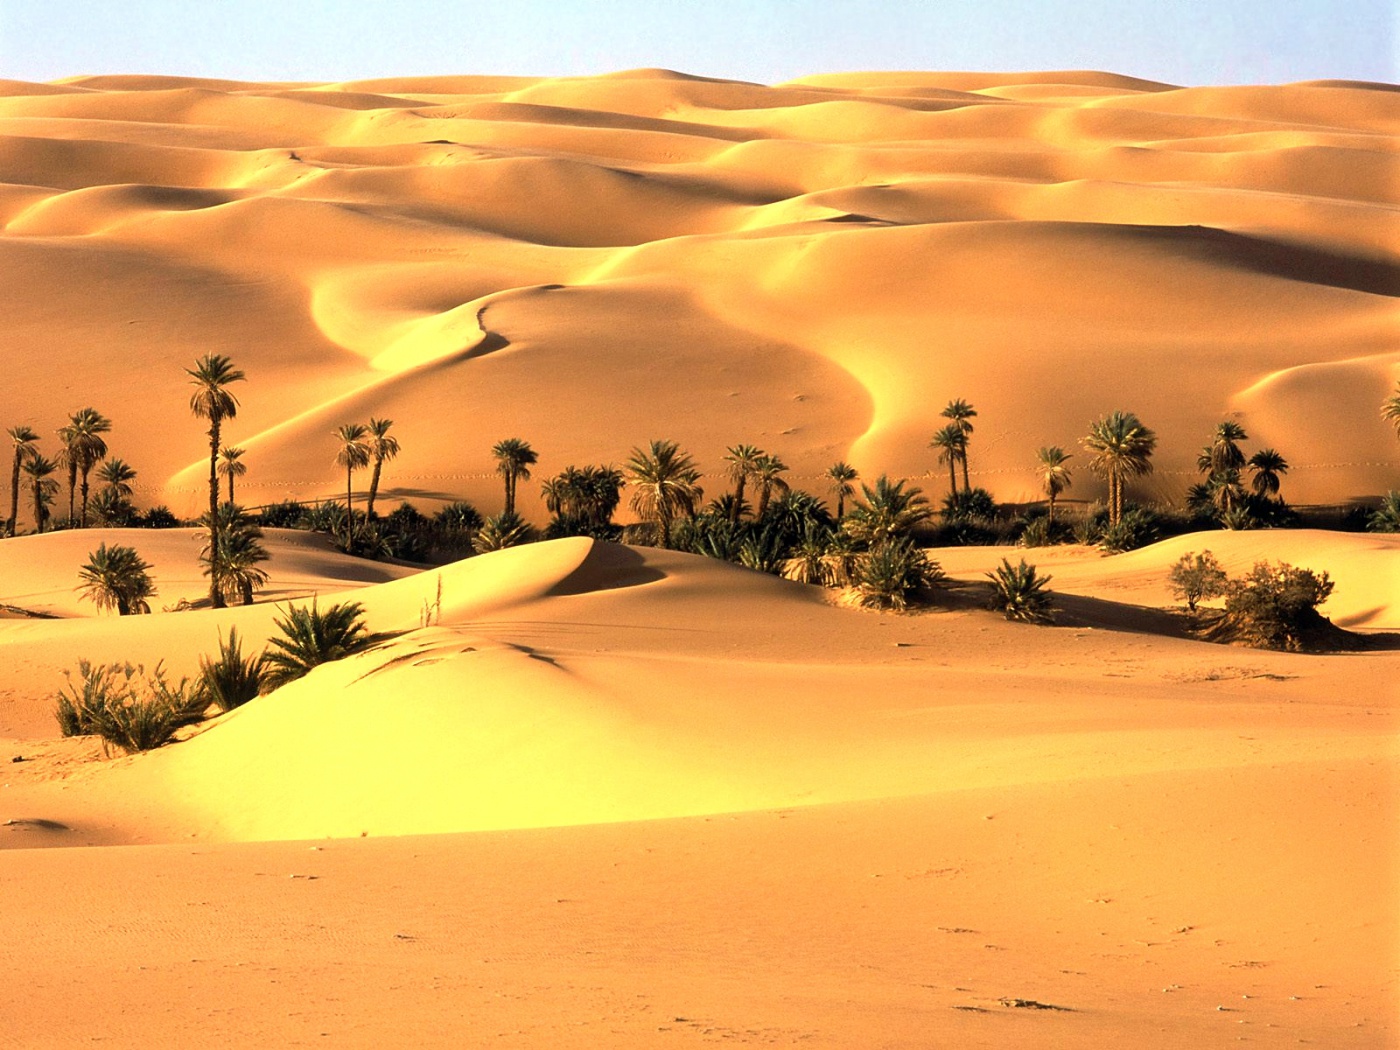  Free download Desert oasis nature wallpaper in 1400x1050 resolution